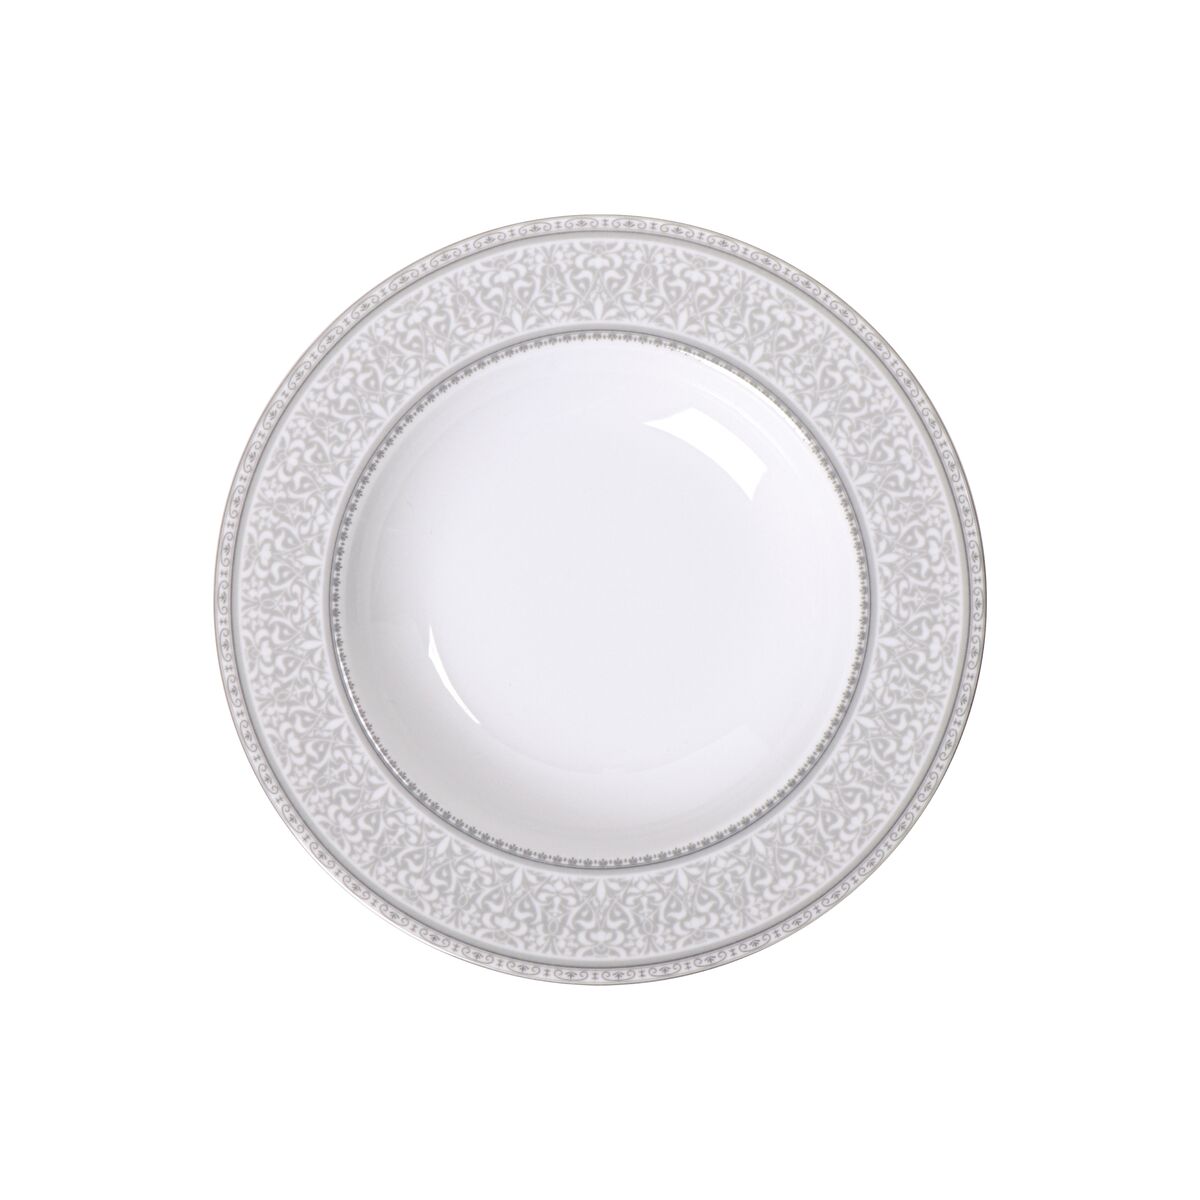 Tramontina Gabrielle Decorated Porcelain Soup Plate, 23 cm